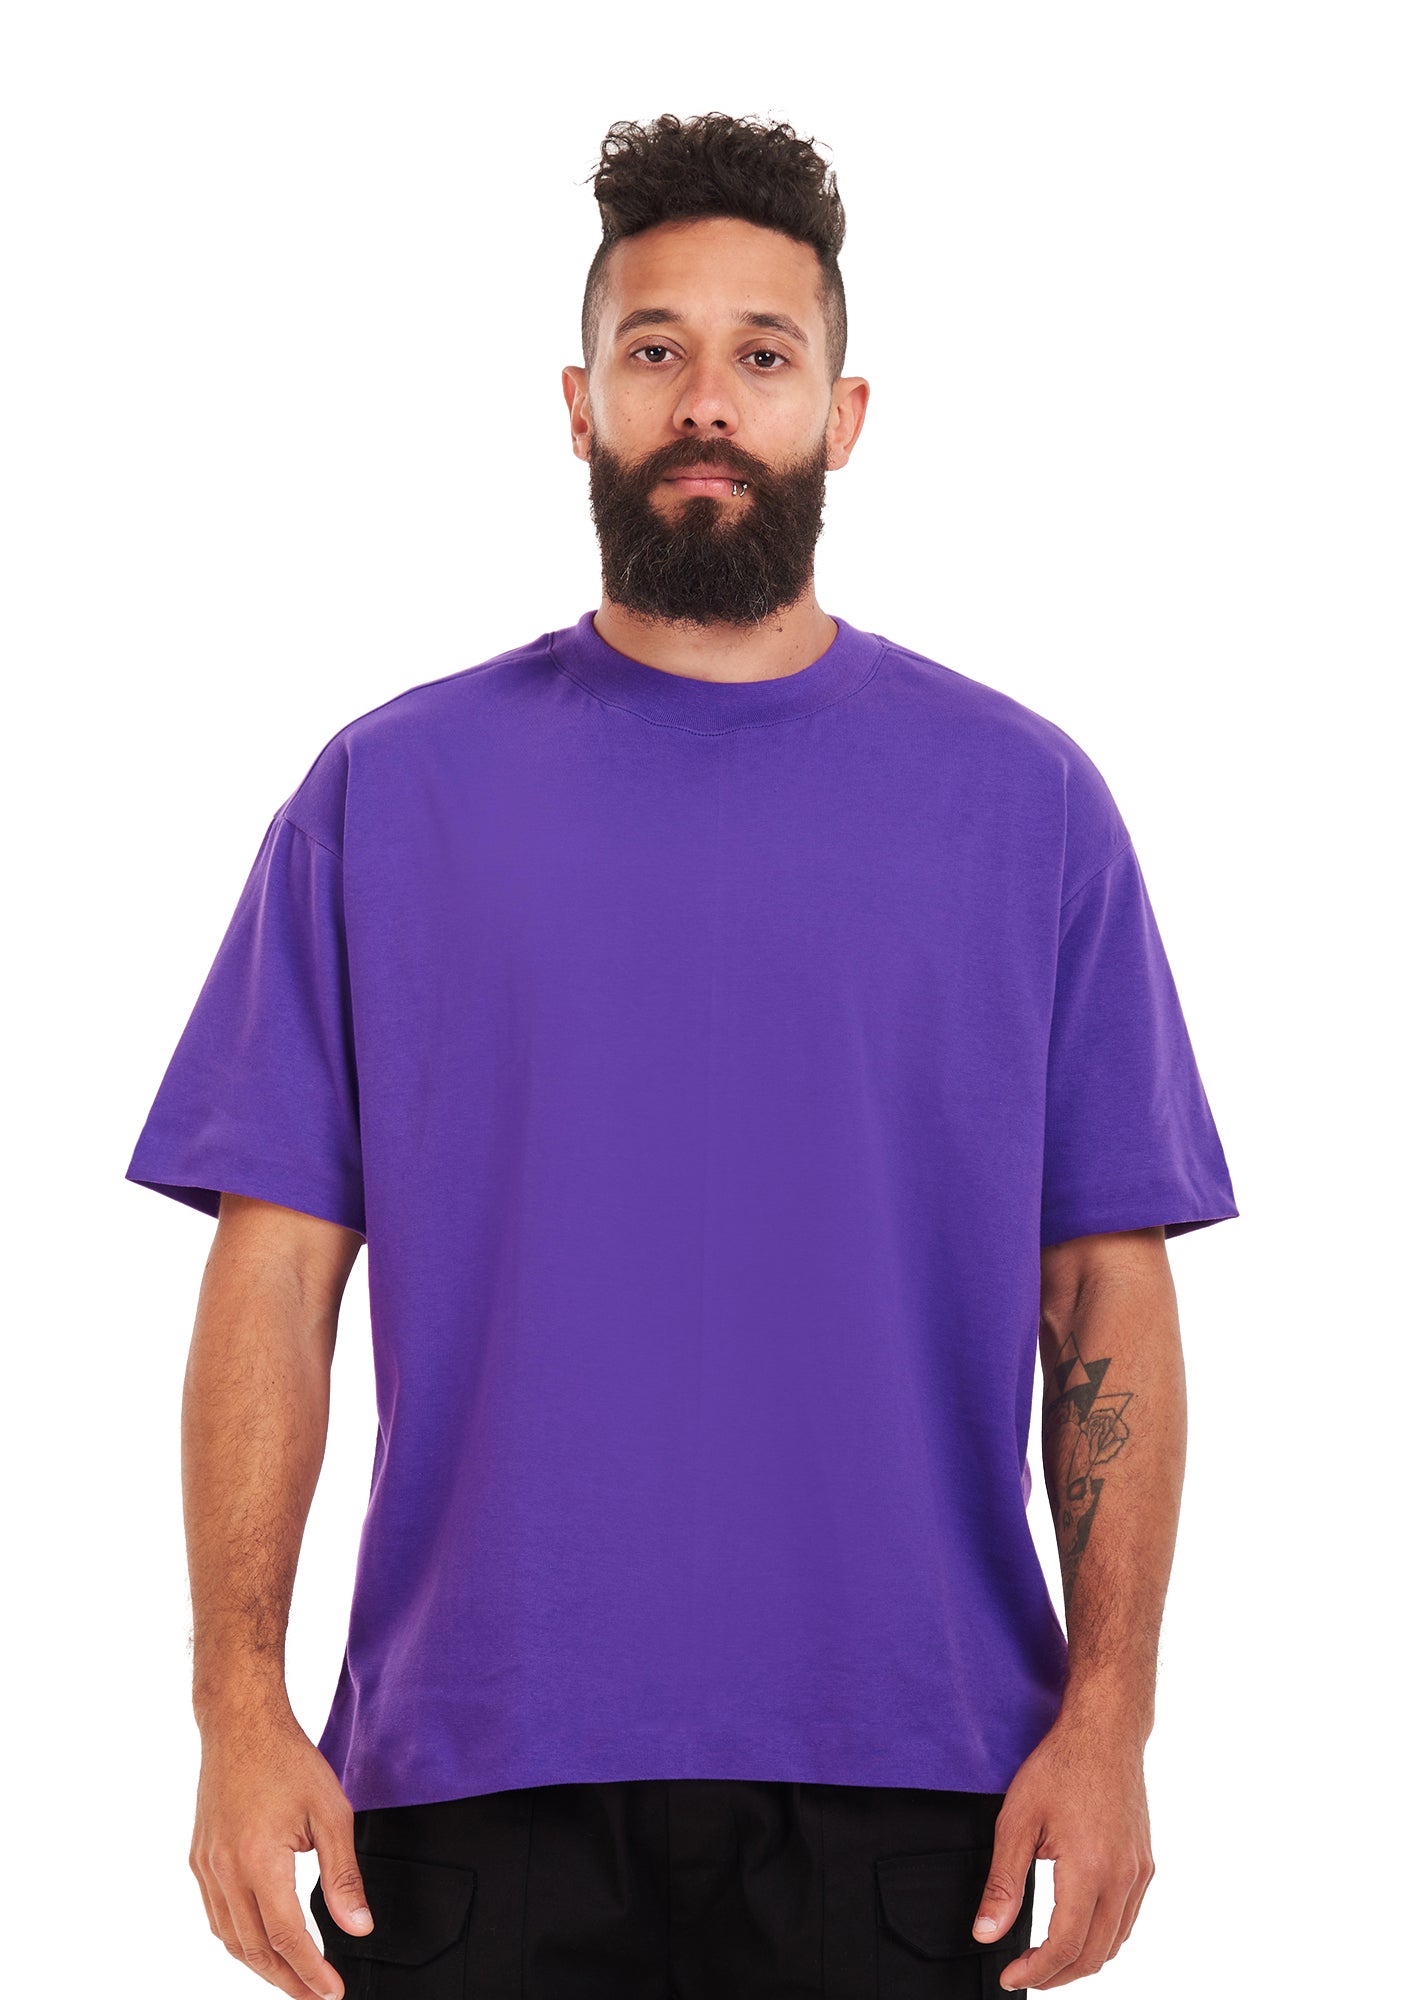 Words tee Oversized printed Purple T-shirt .